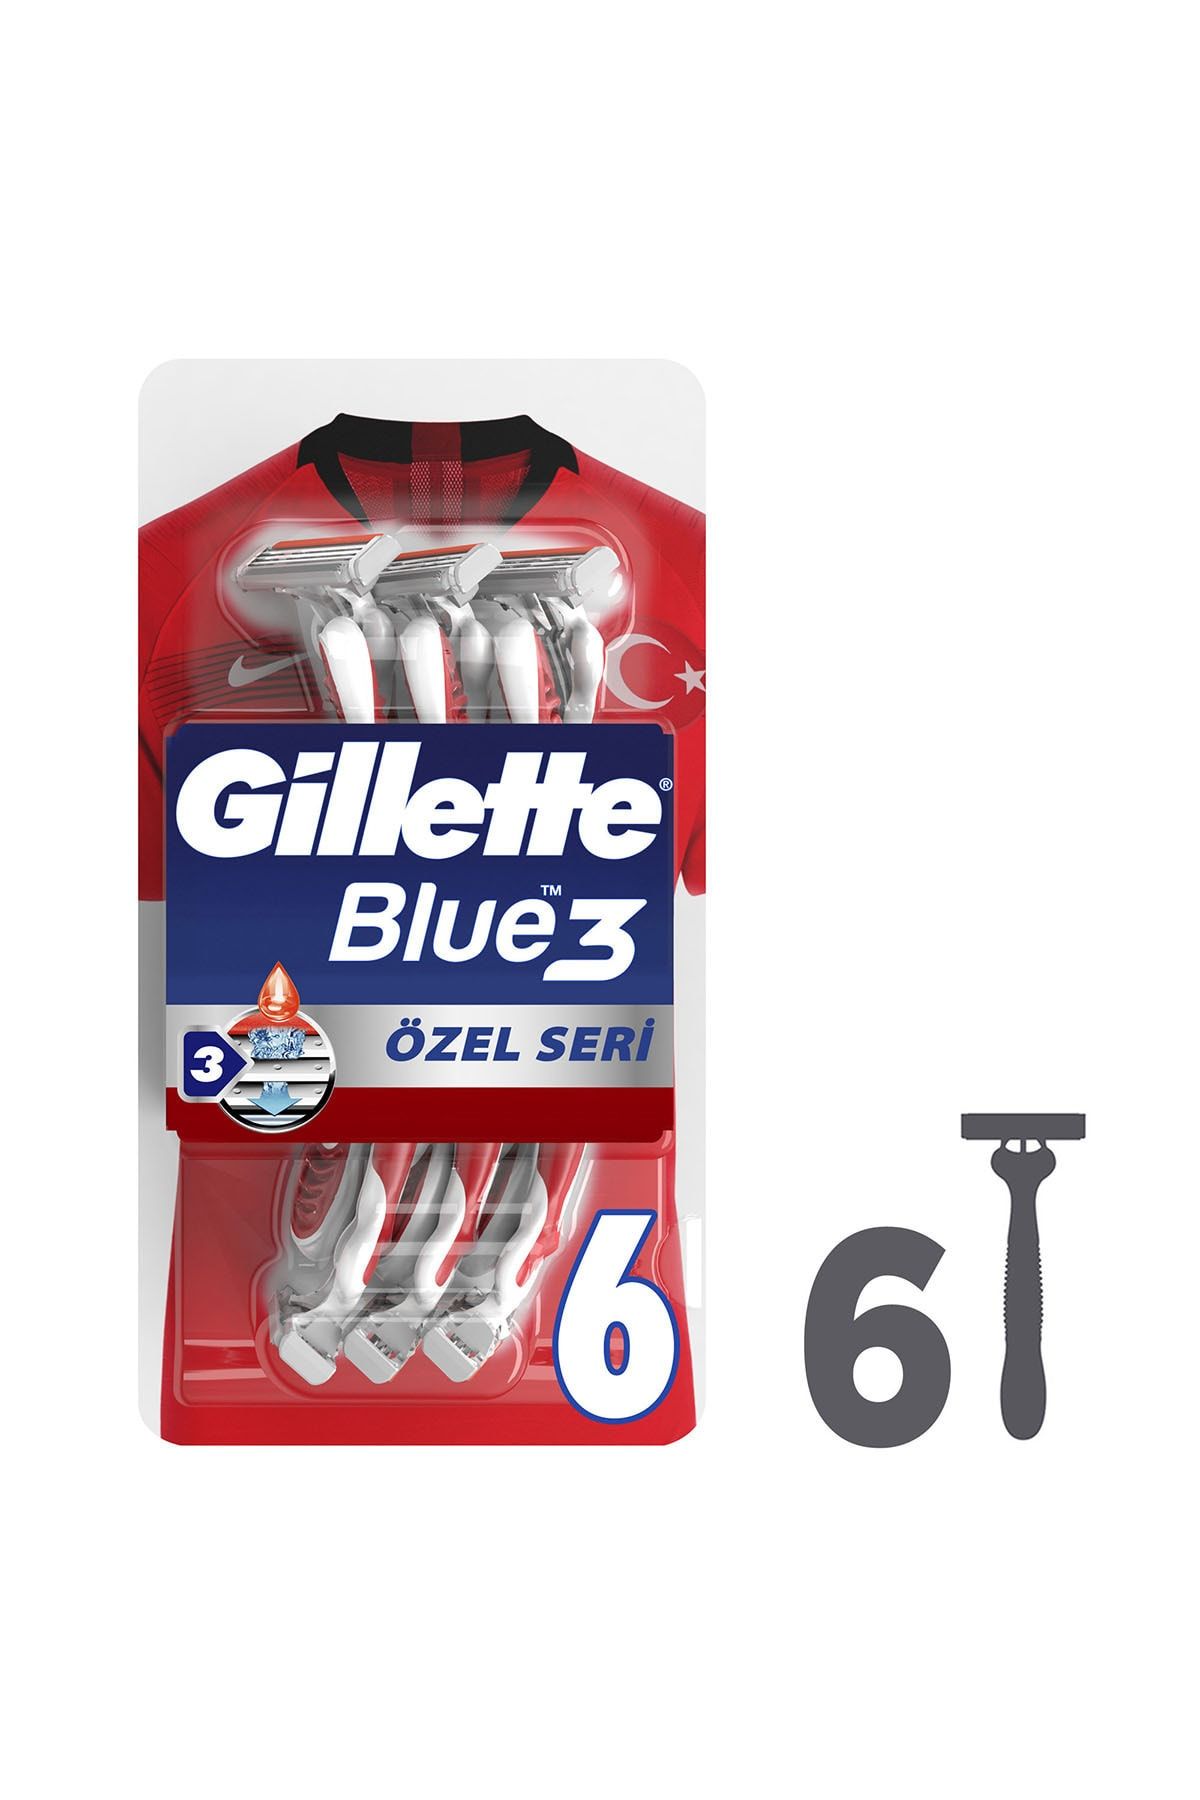 Gillette Blue3 Pride Kullan At 6'lı Tıraş Bıçağı 7702018076161